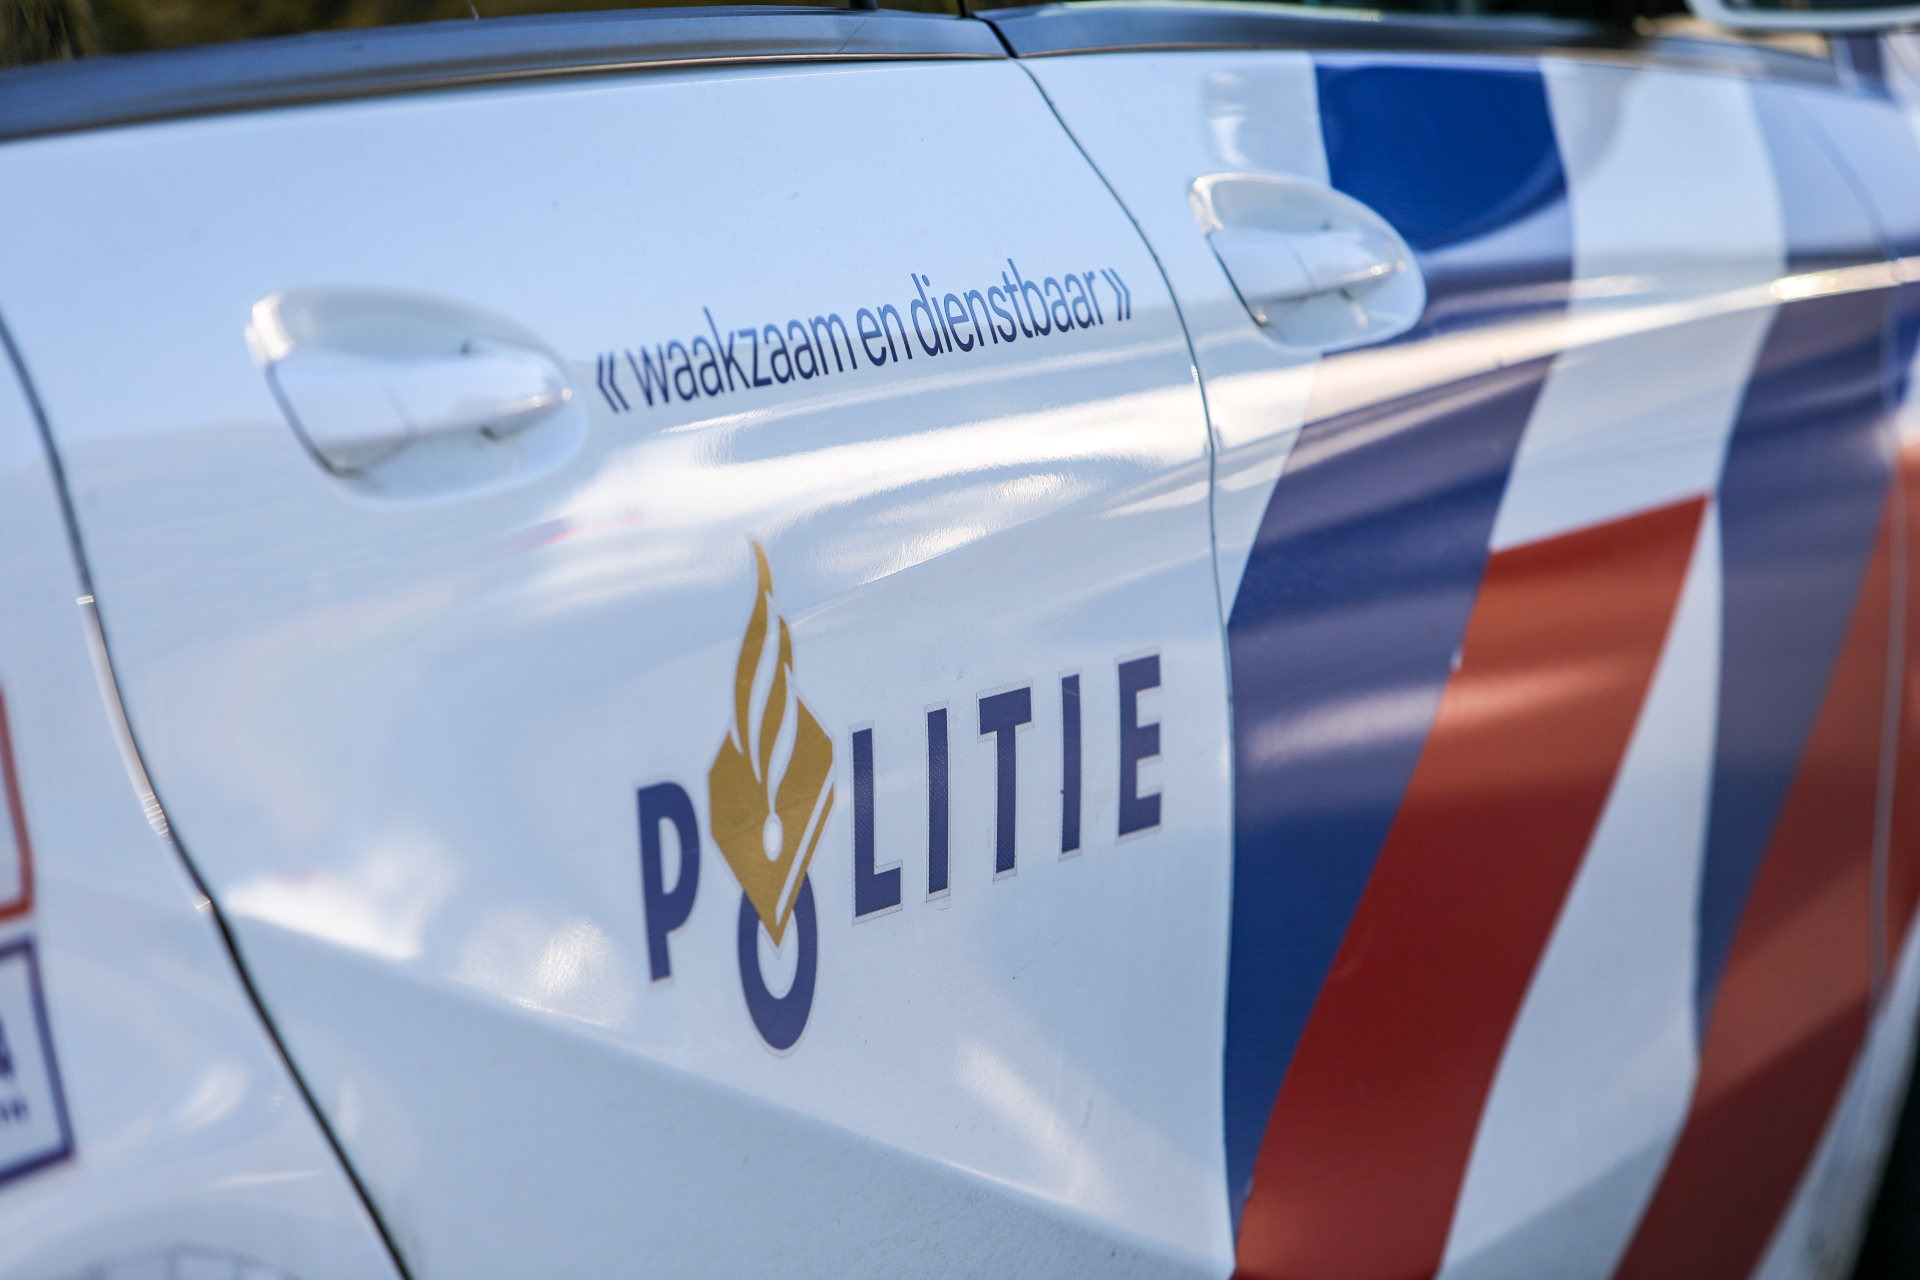 Politie onderzoek in woning Zutphen